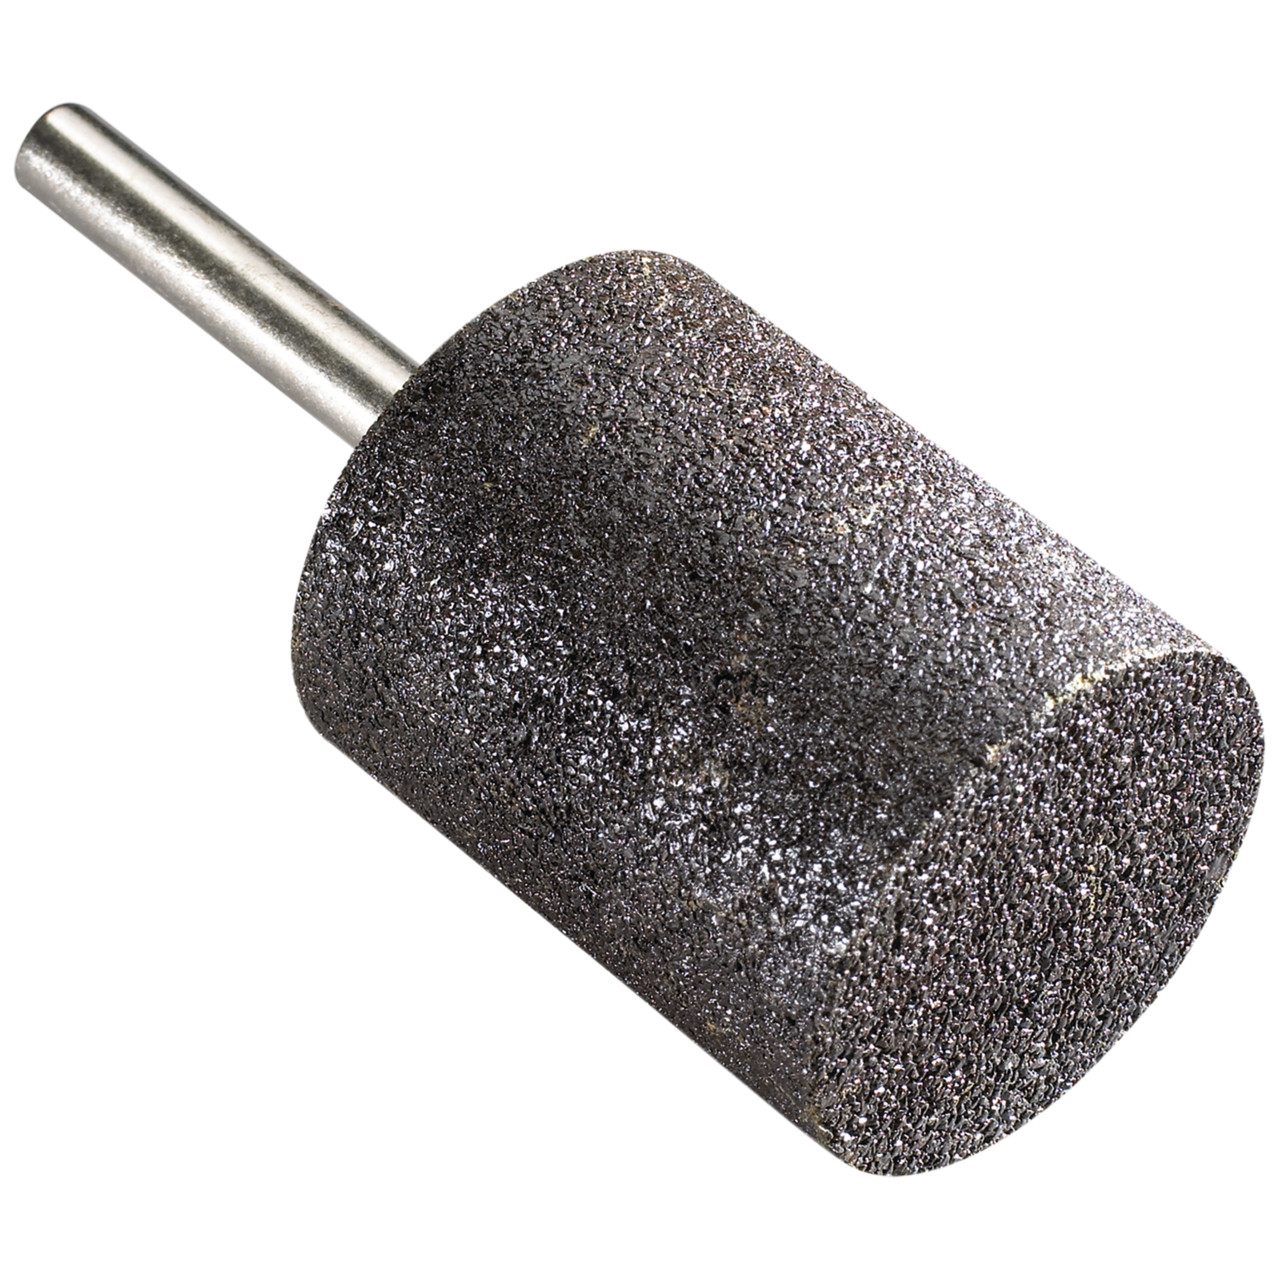 Tyrolit Punti montati in resina DxT-SxL 16x32-6x40 Per acciaio inox, forma: 52ZY - cilindro (punto montato), Art. 682105